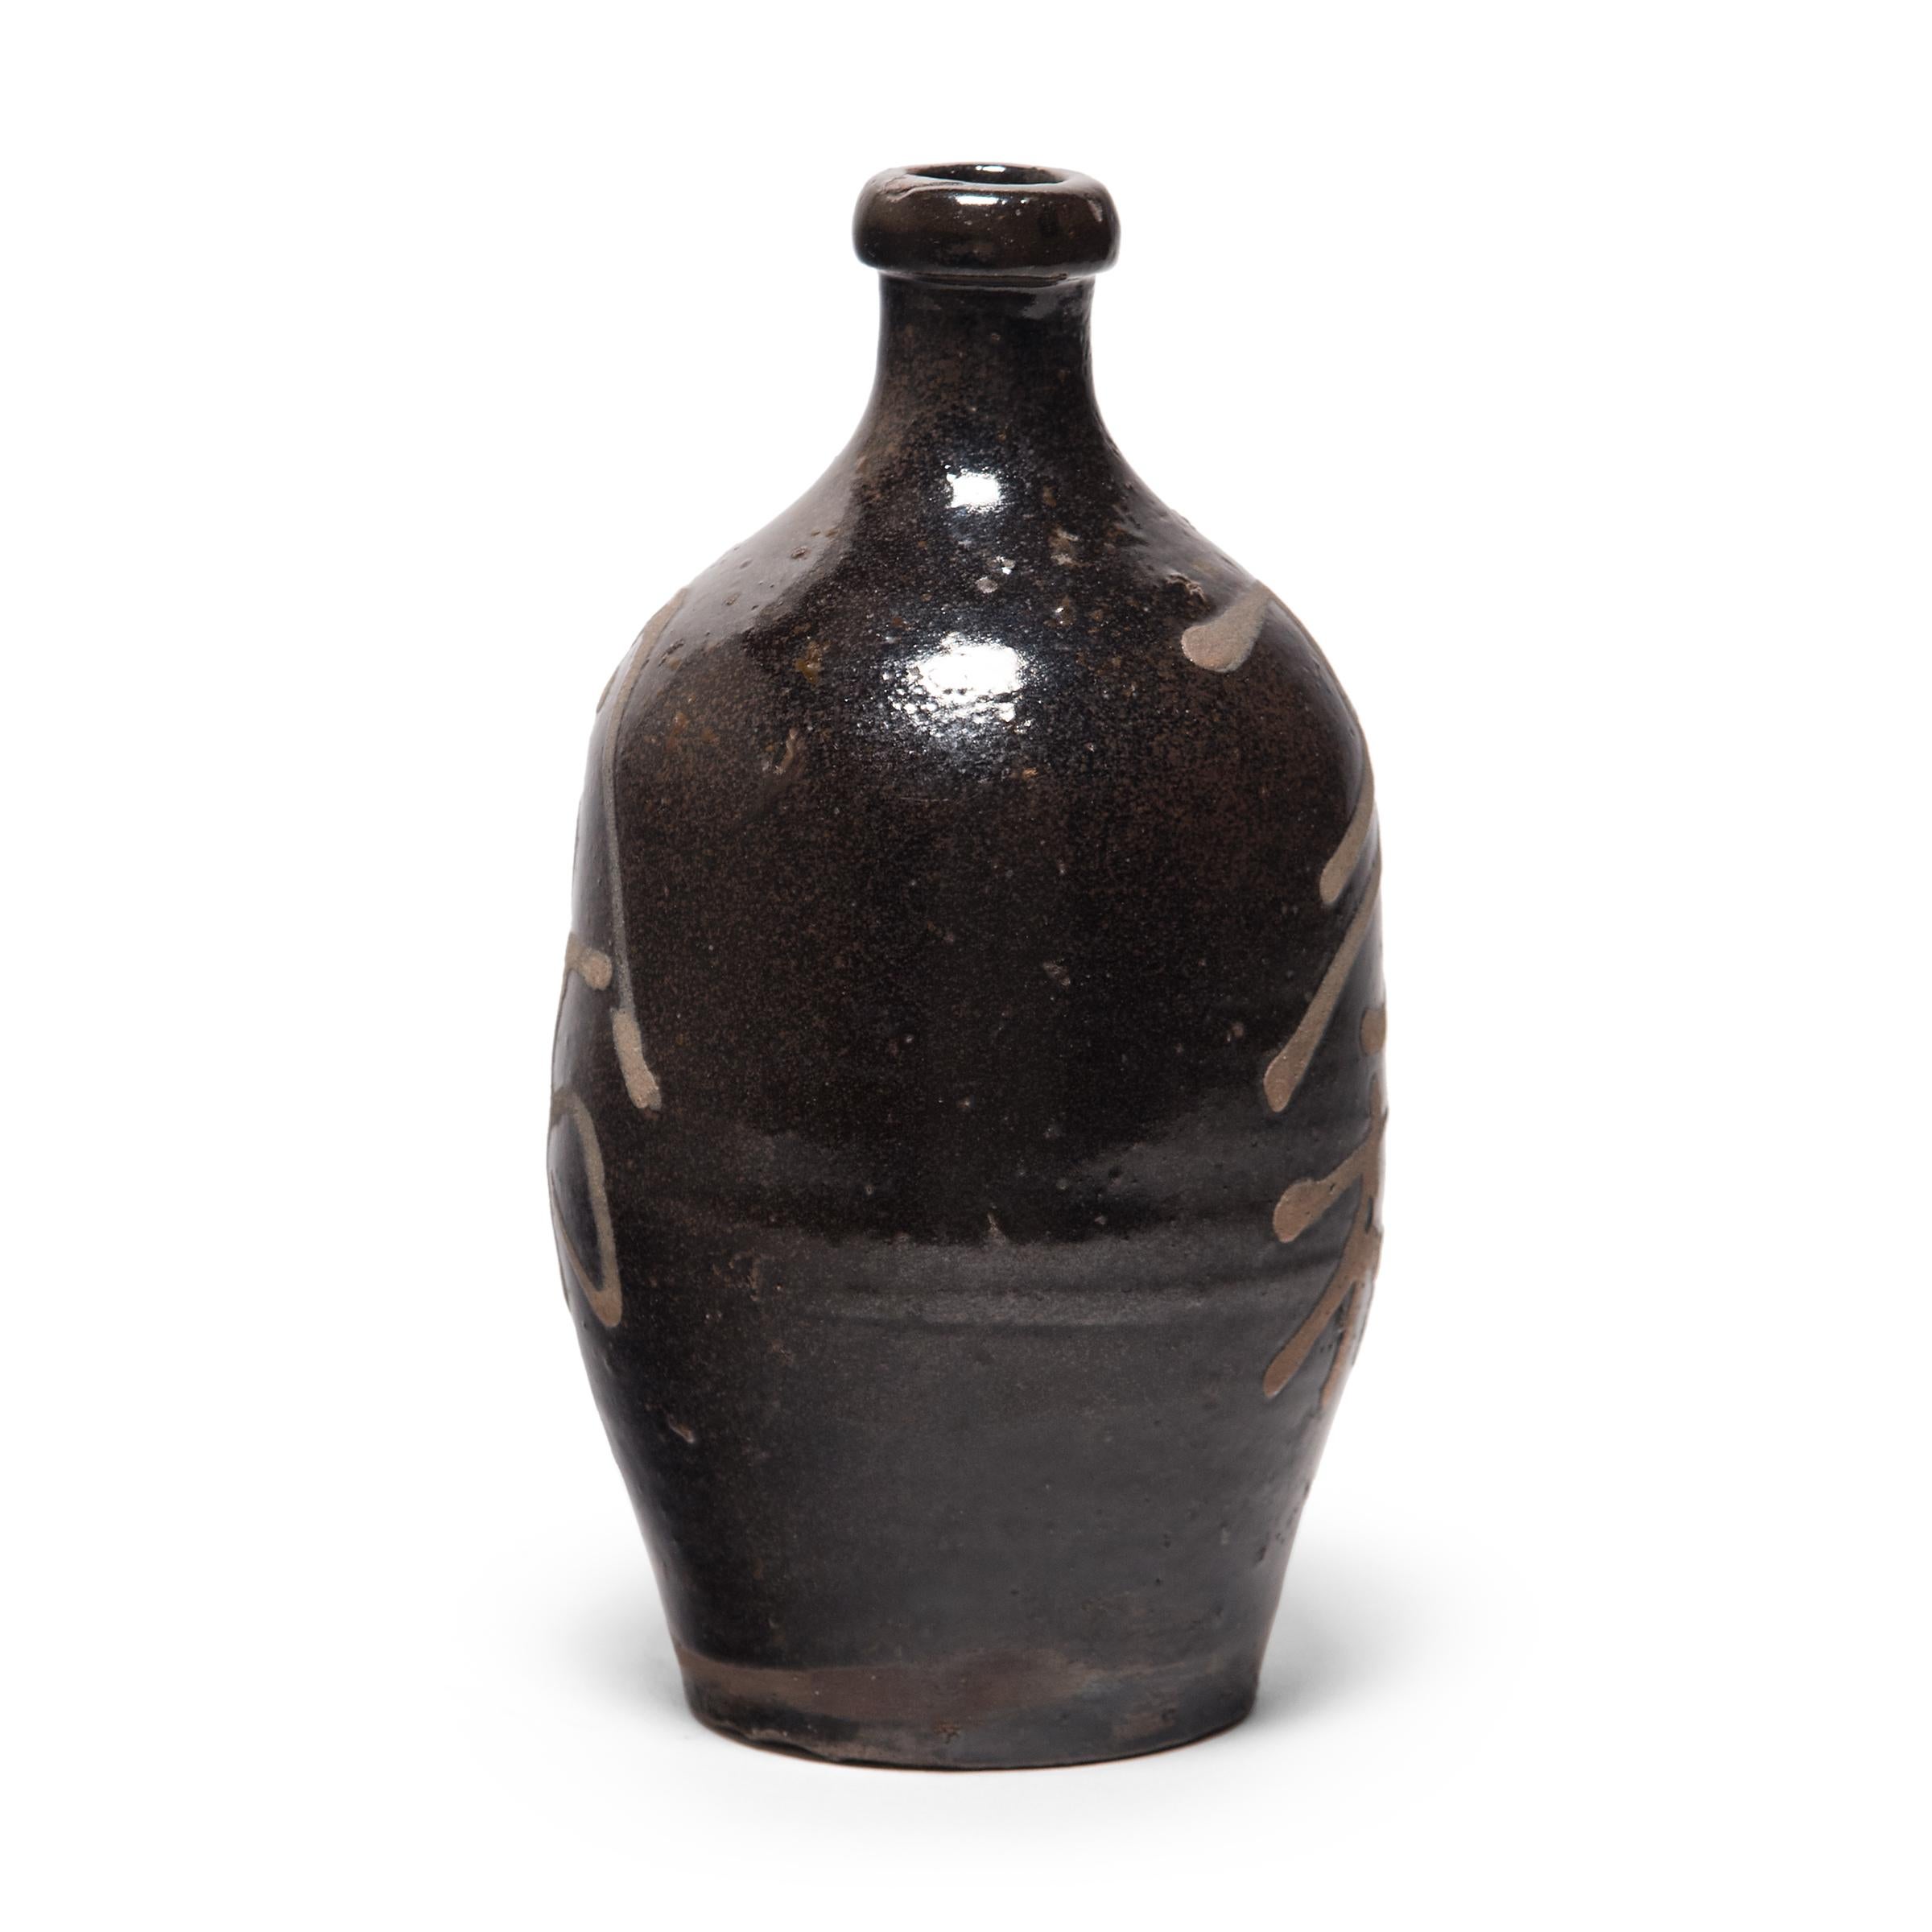 Glazed Japanese Sake Bottle, circa 1900